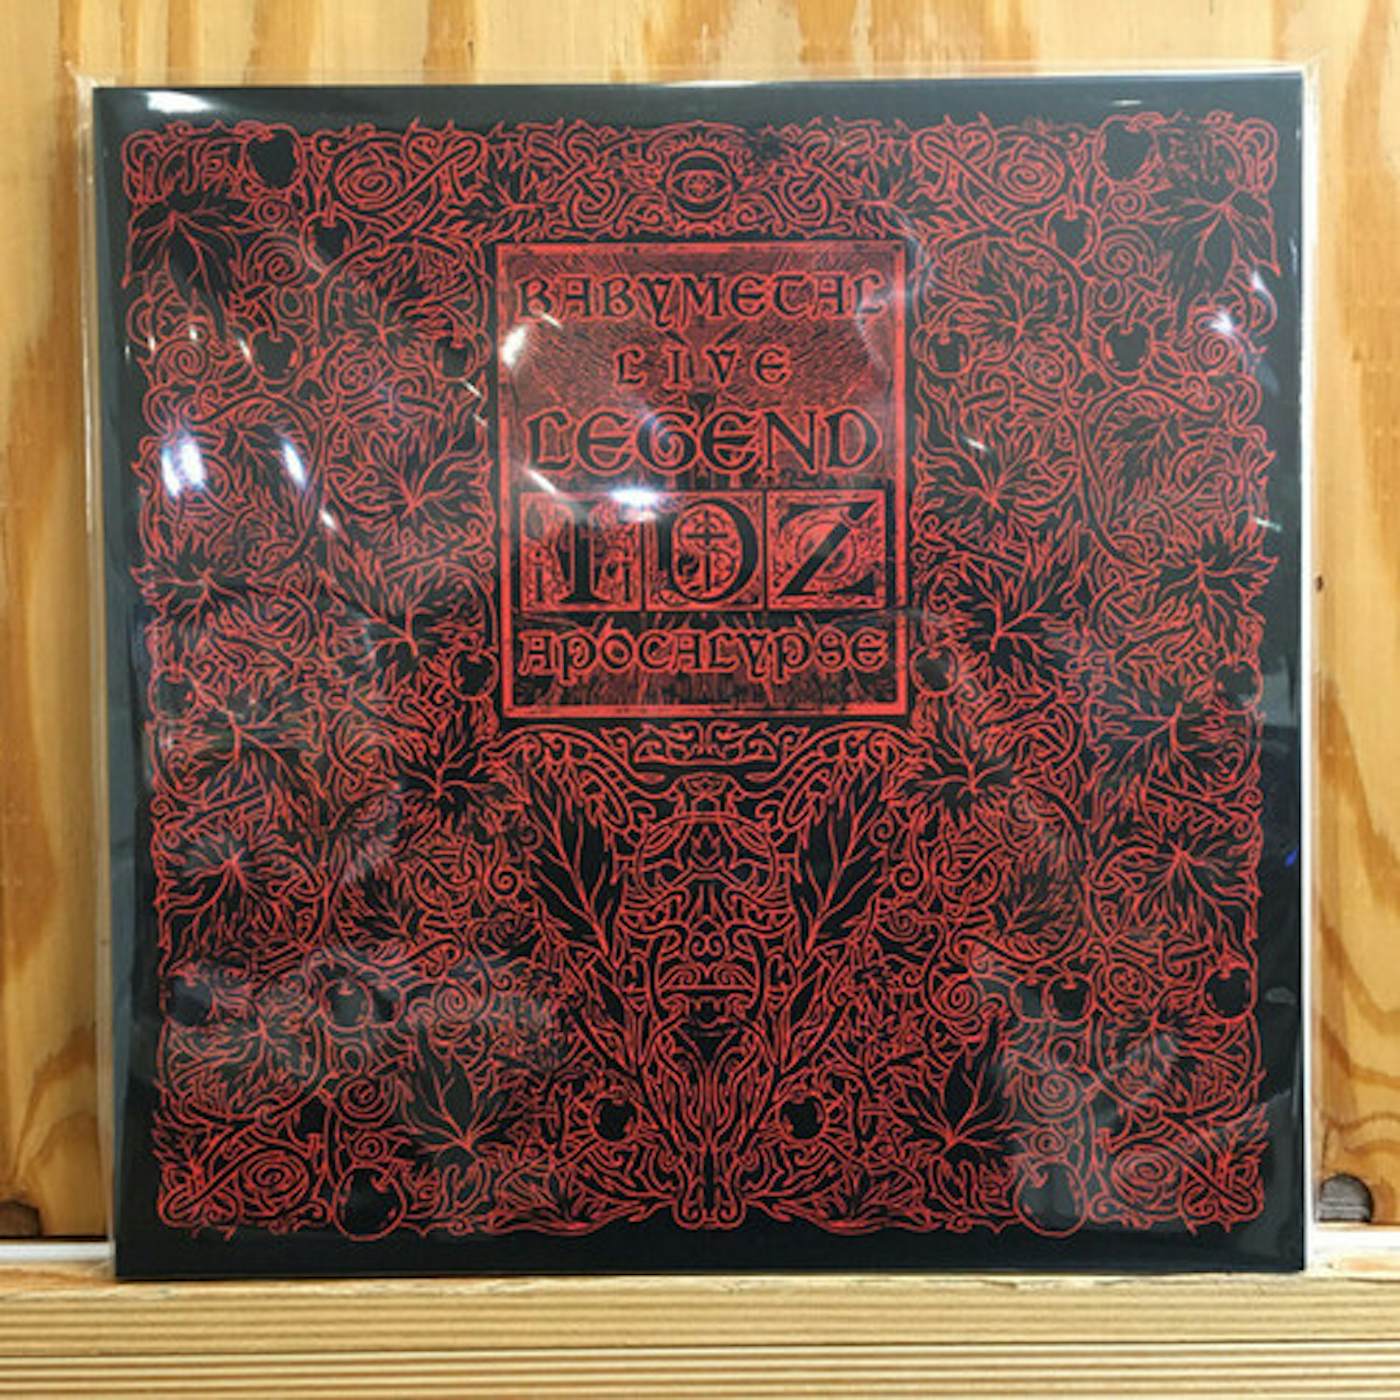 BABYMETAL LIVE (LEGEND I.D.Z APOCALYPSE) Vinyl Record